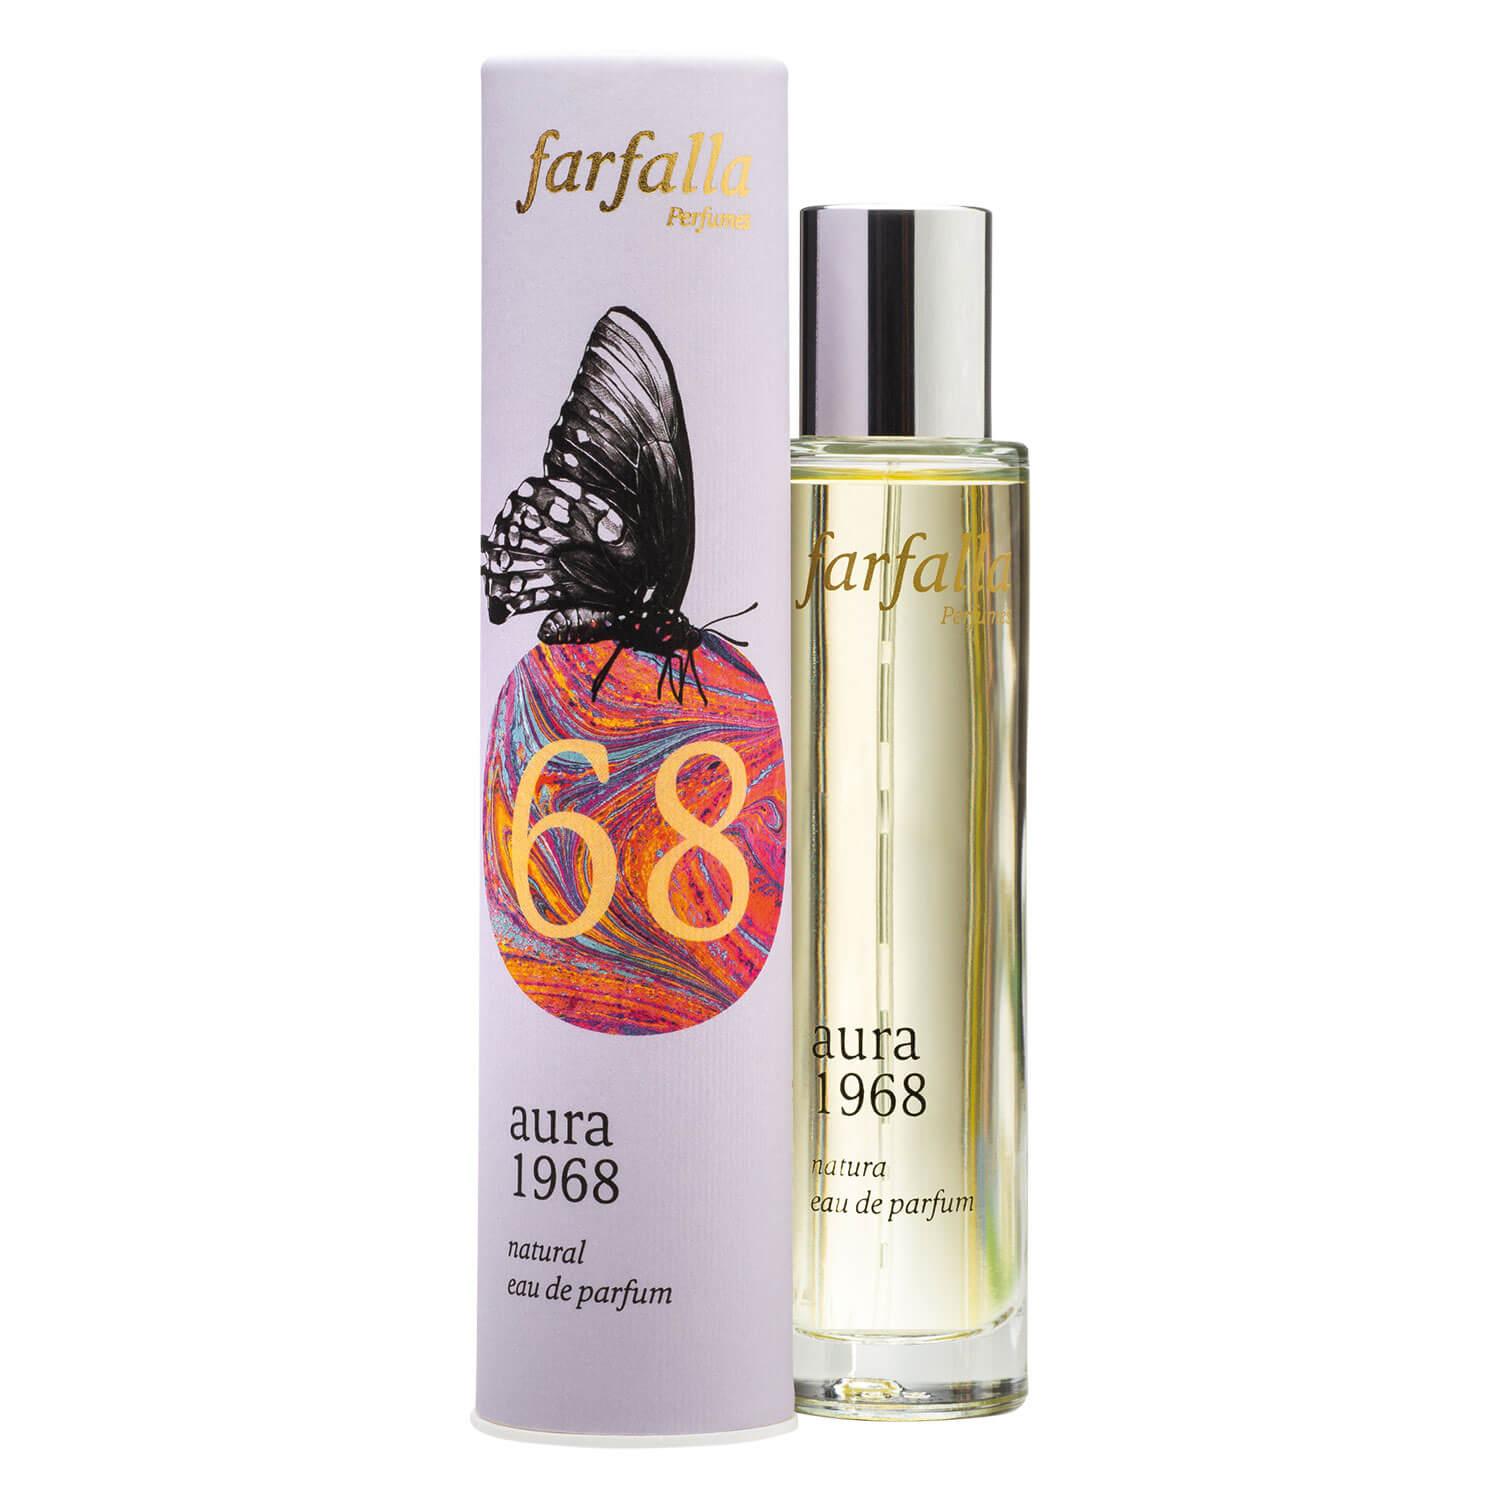 Farfalla Fragrance - Aura 1968 Natural Eau de Parfum